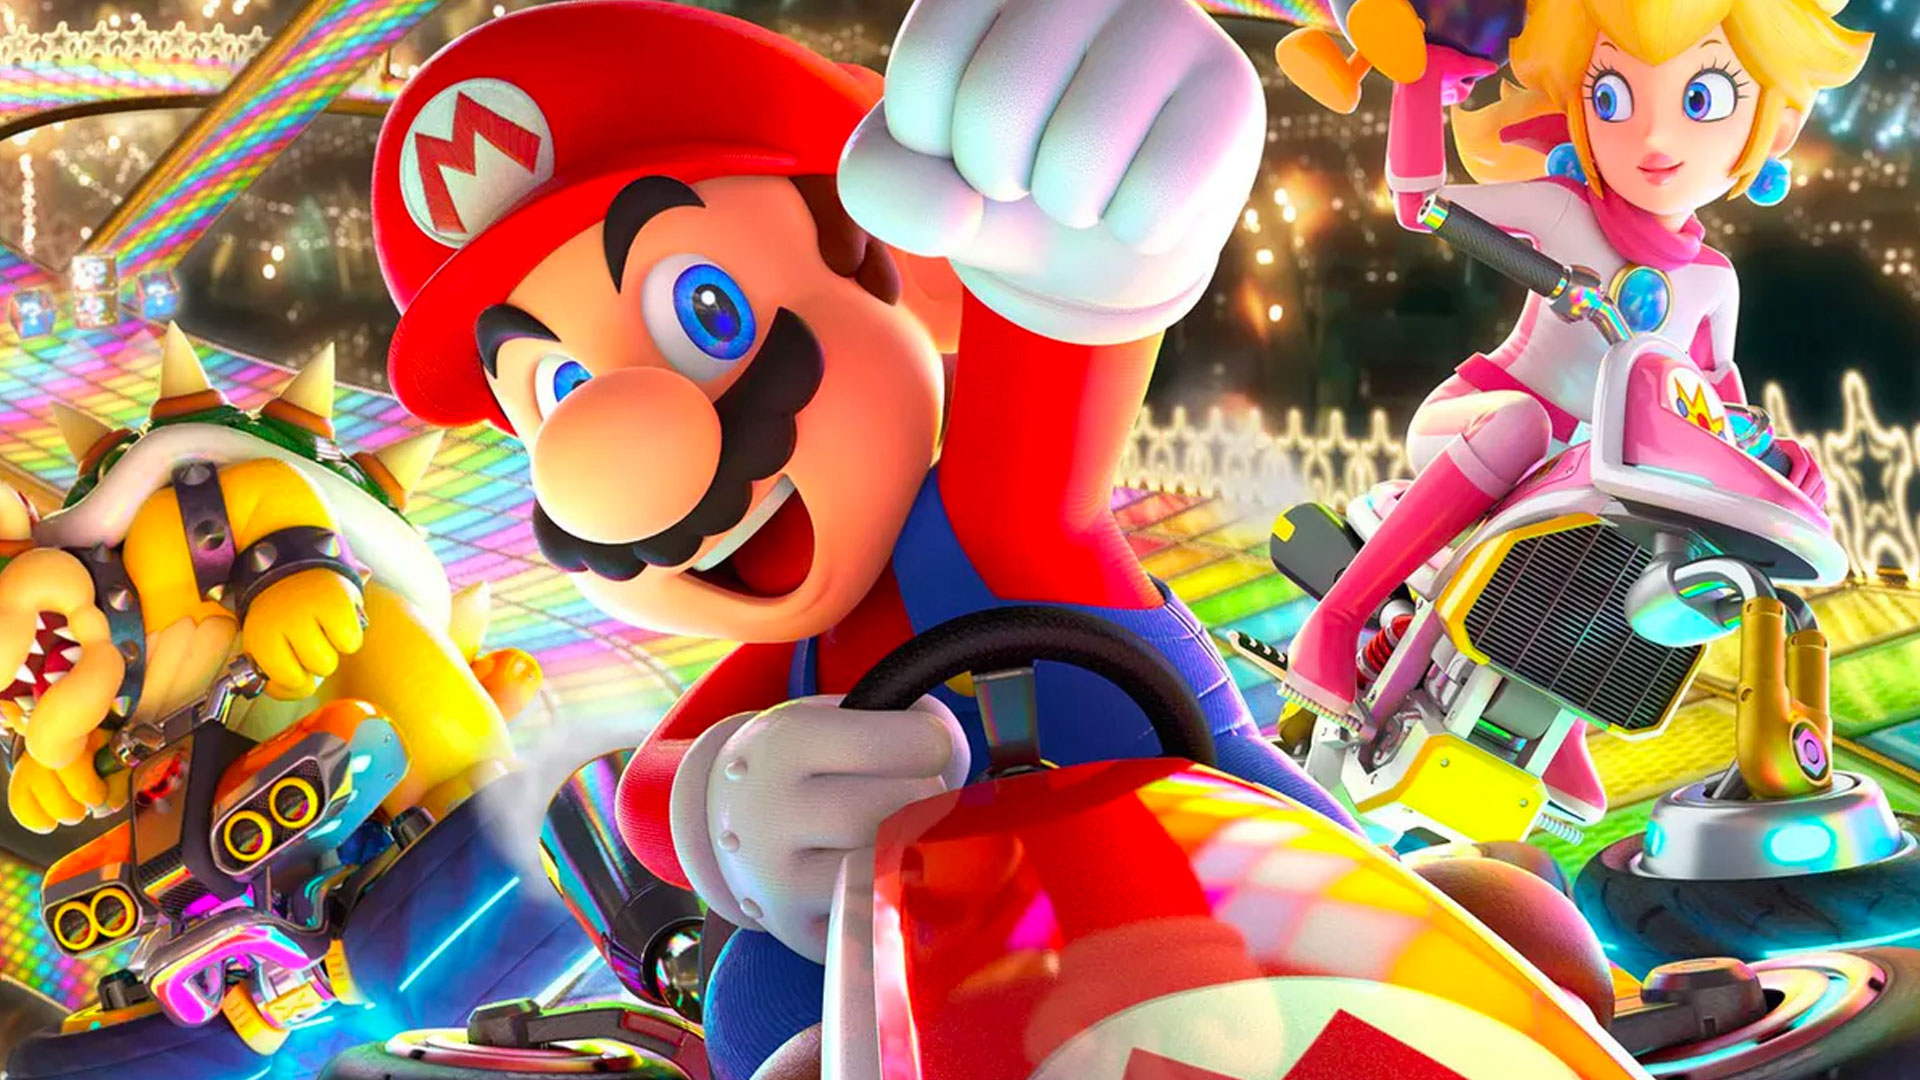 Mario Kart 8 sales make it the third best-selling Nintendo game |  GamesRadar+